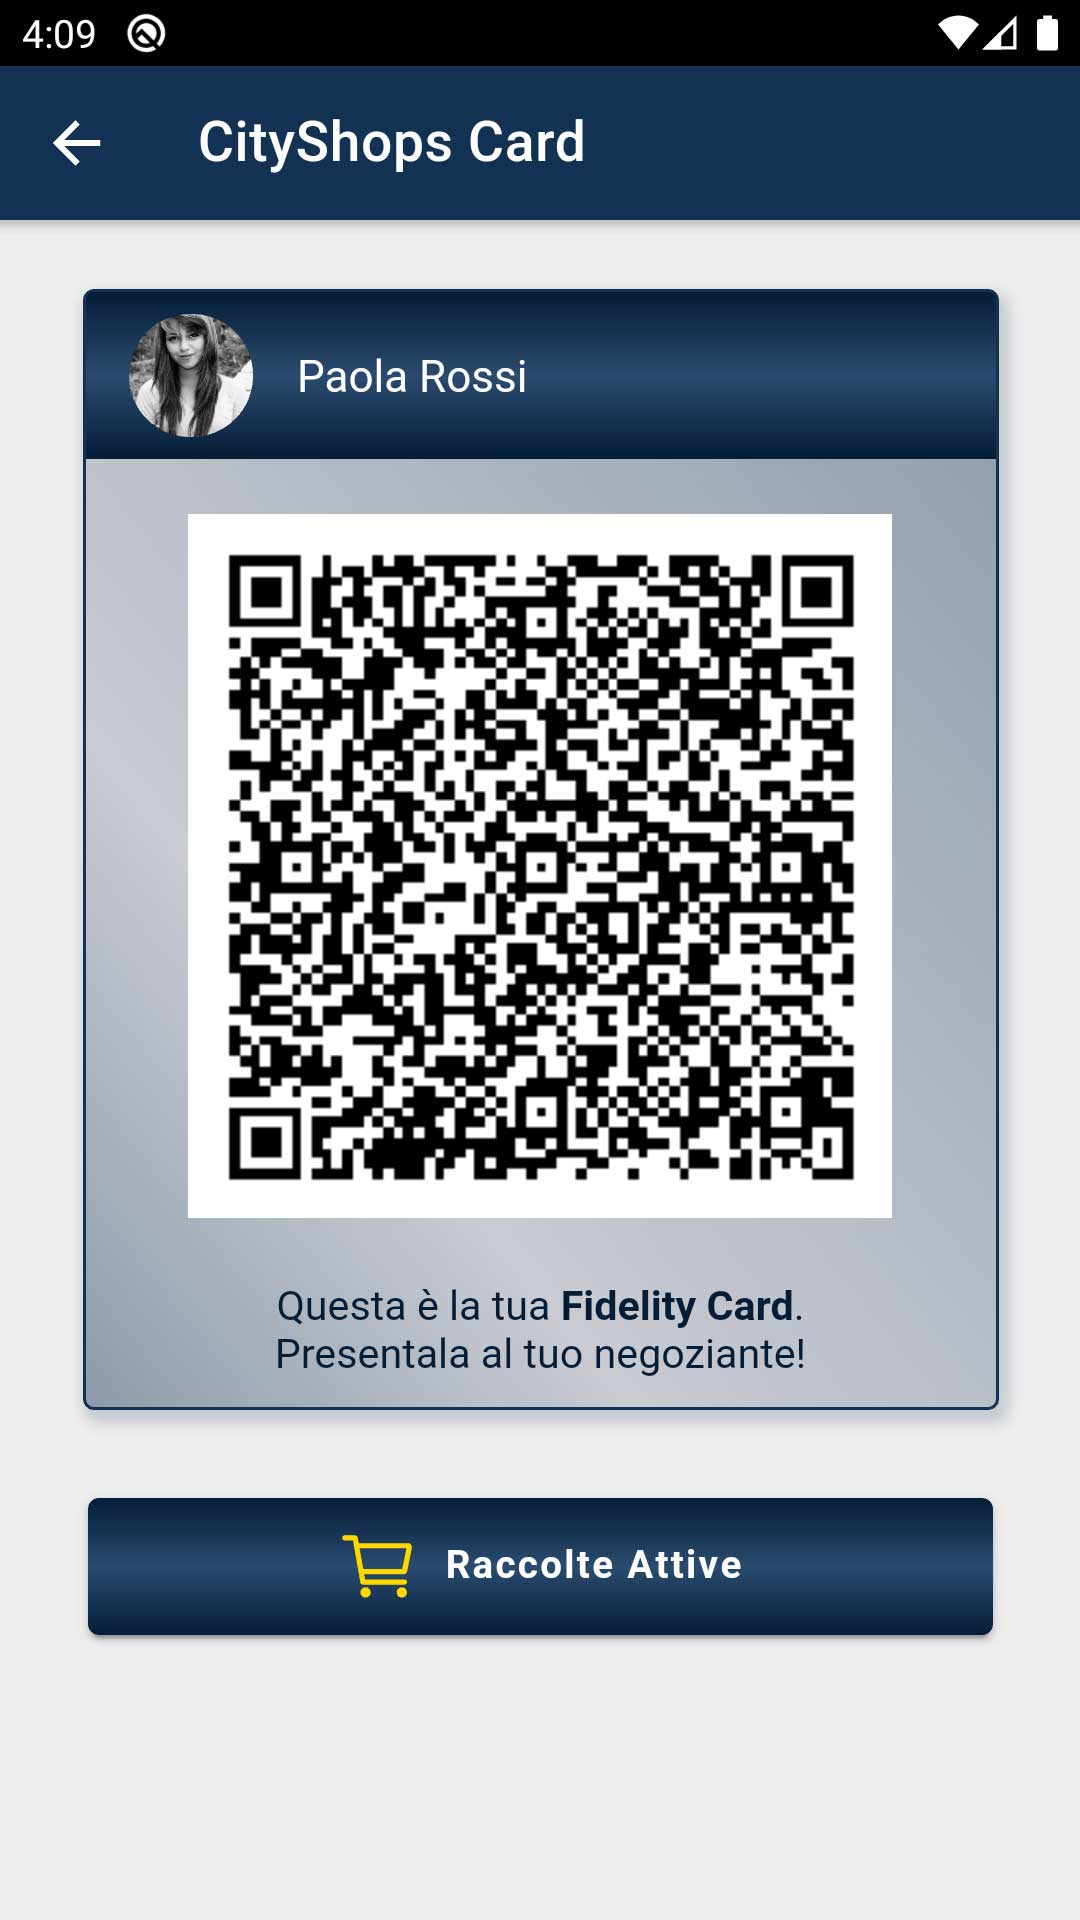 Fidelity Card Virtuale